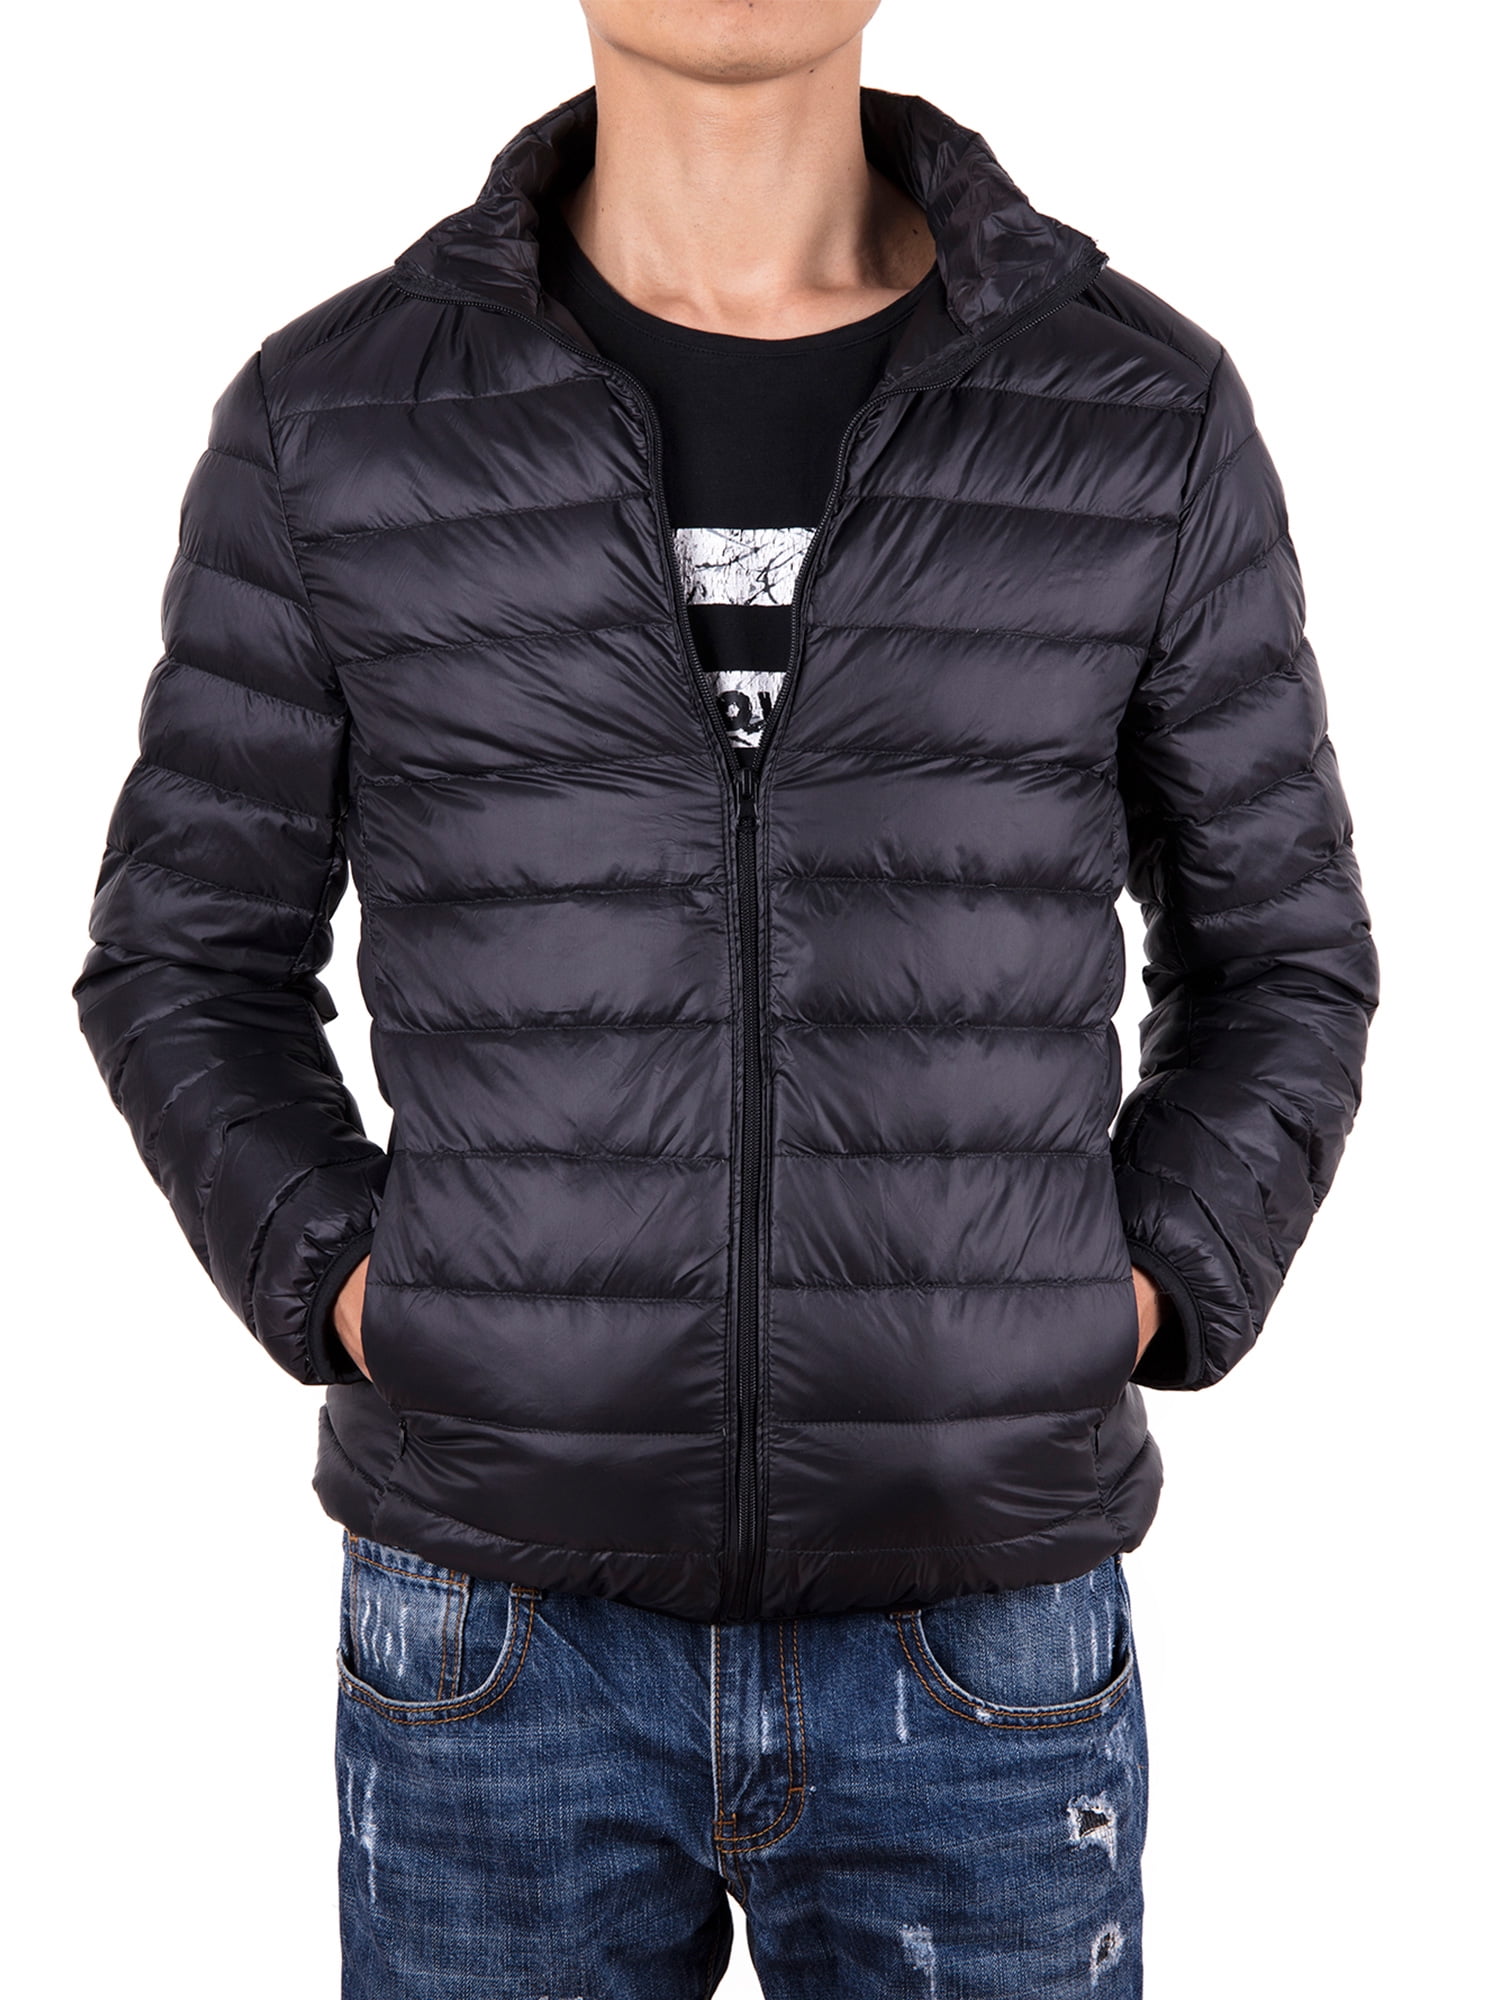 Men's Hooded Puffer Coat Winter Lightweight Packable Warm Breathable ...